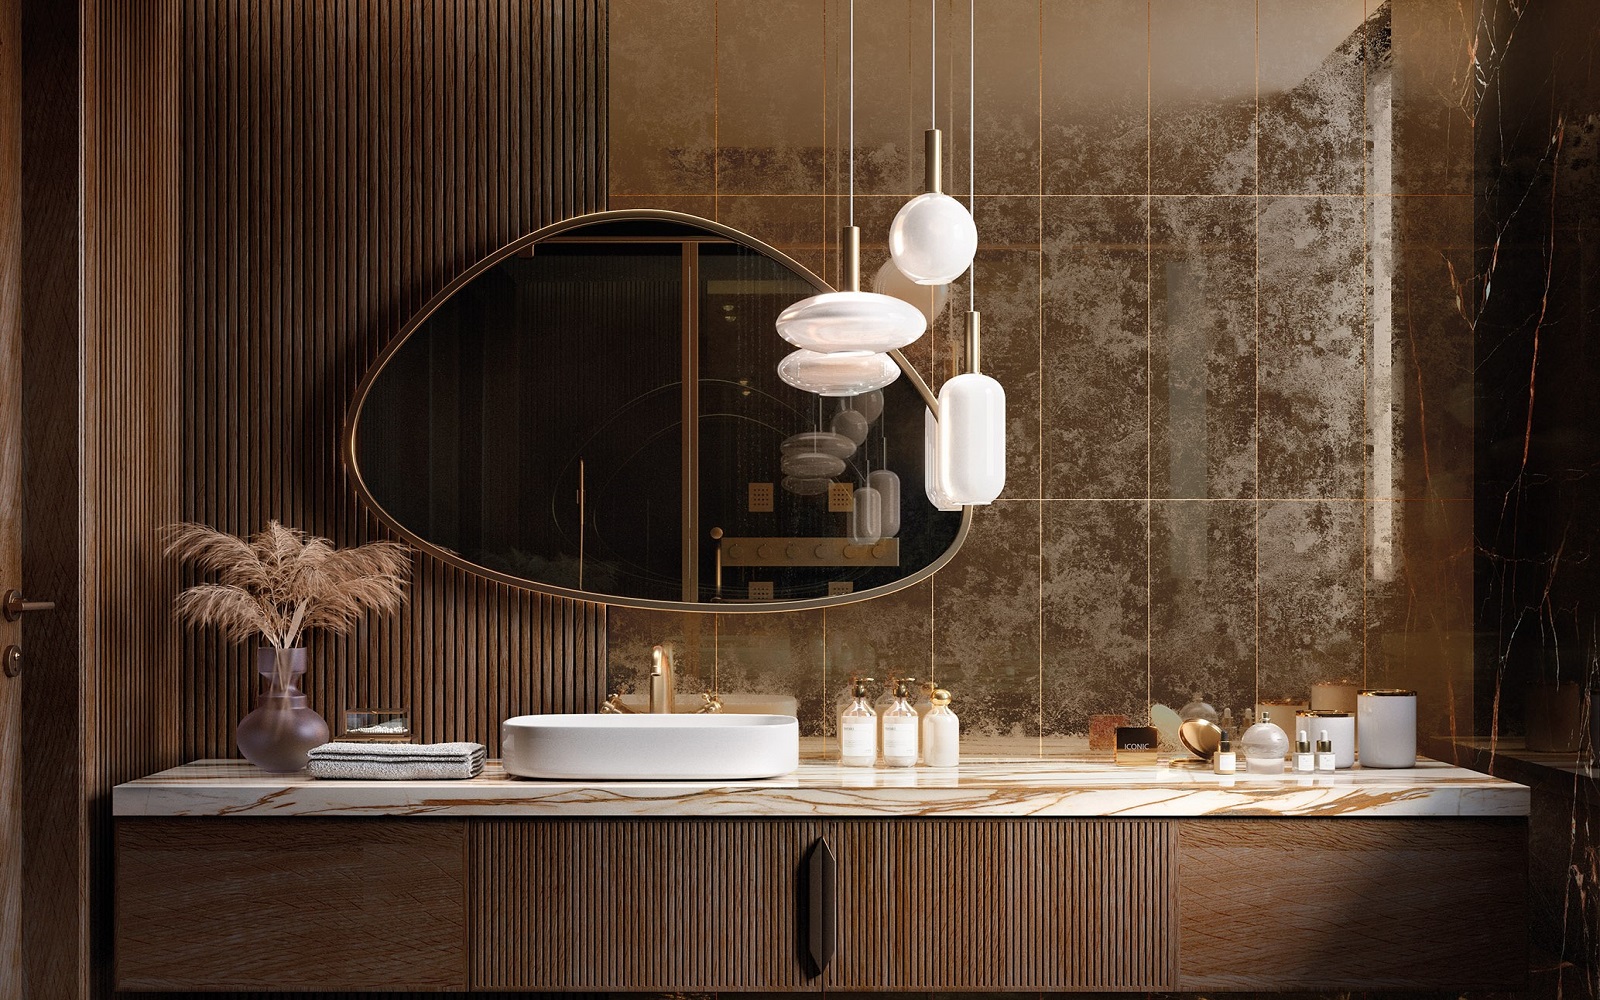 reflective gold tiles behind bathroom vanity and mirror